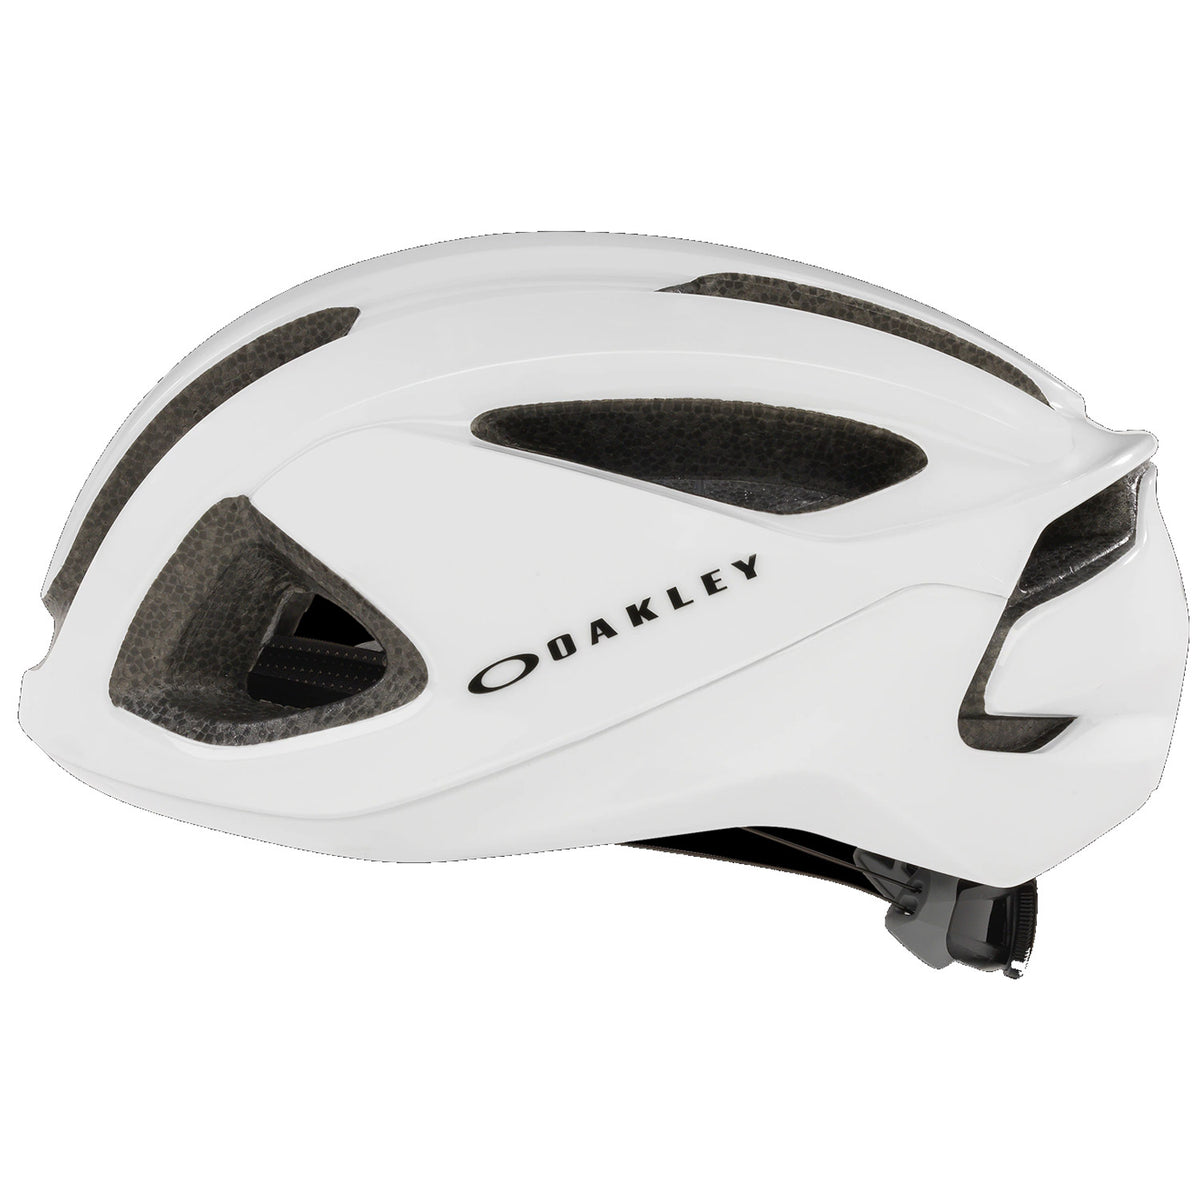 Oakley Aro 3 Lite helmet - White | All4cycling